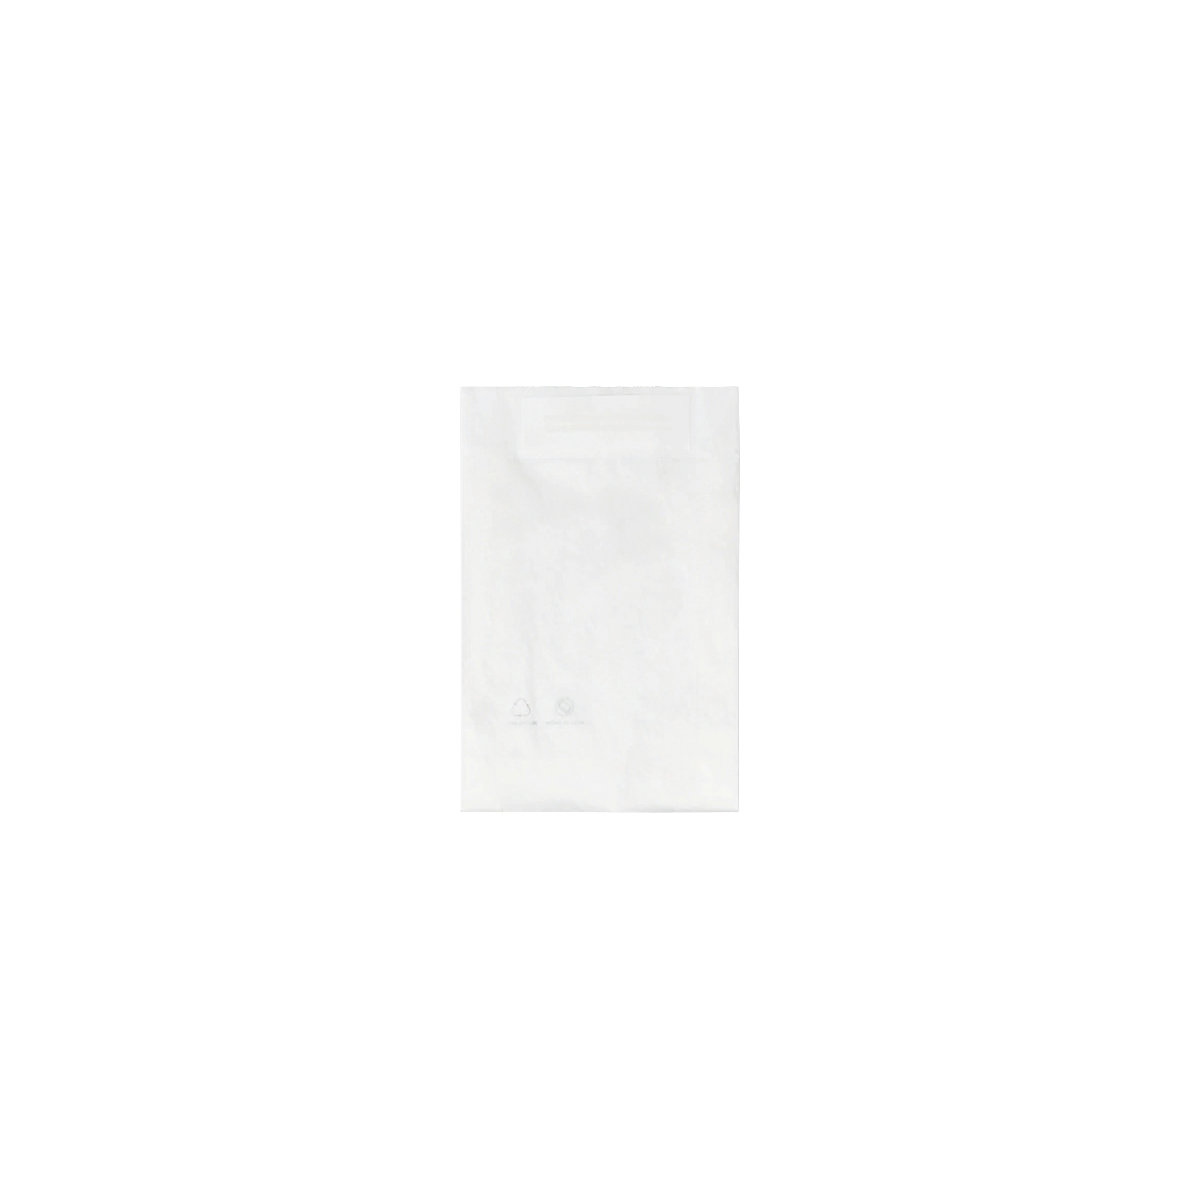 Sacchetti piatti con strisce adesive – terra, in carta pergamina, lungh. x largh. 200 x 150 mm, conf. da 250 pz.-2